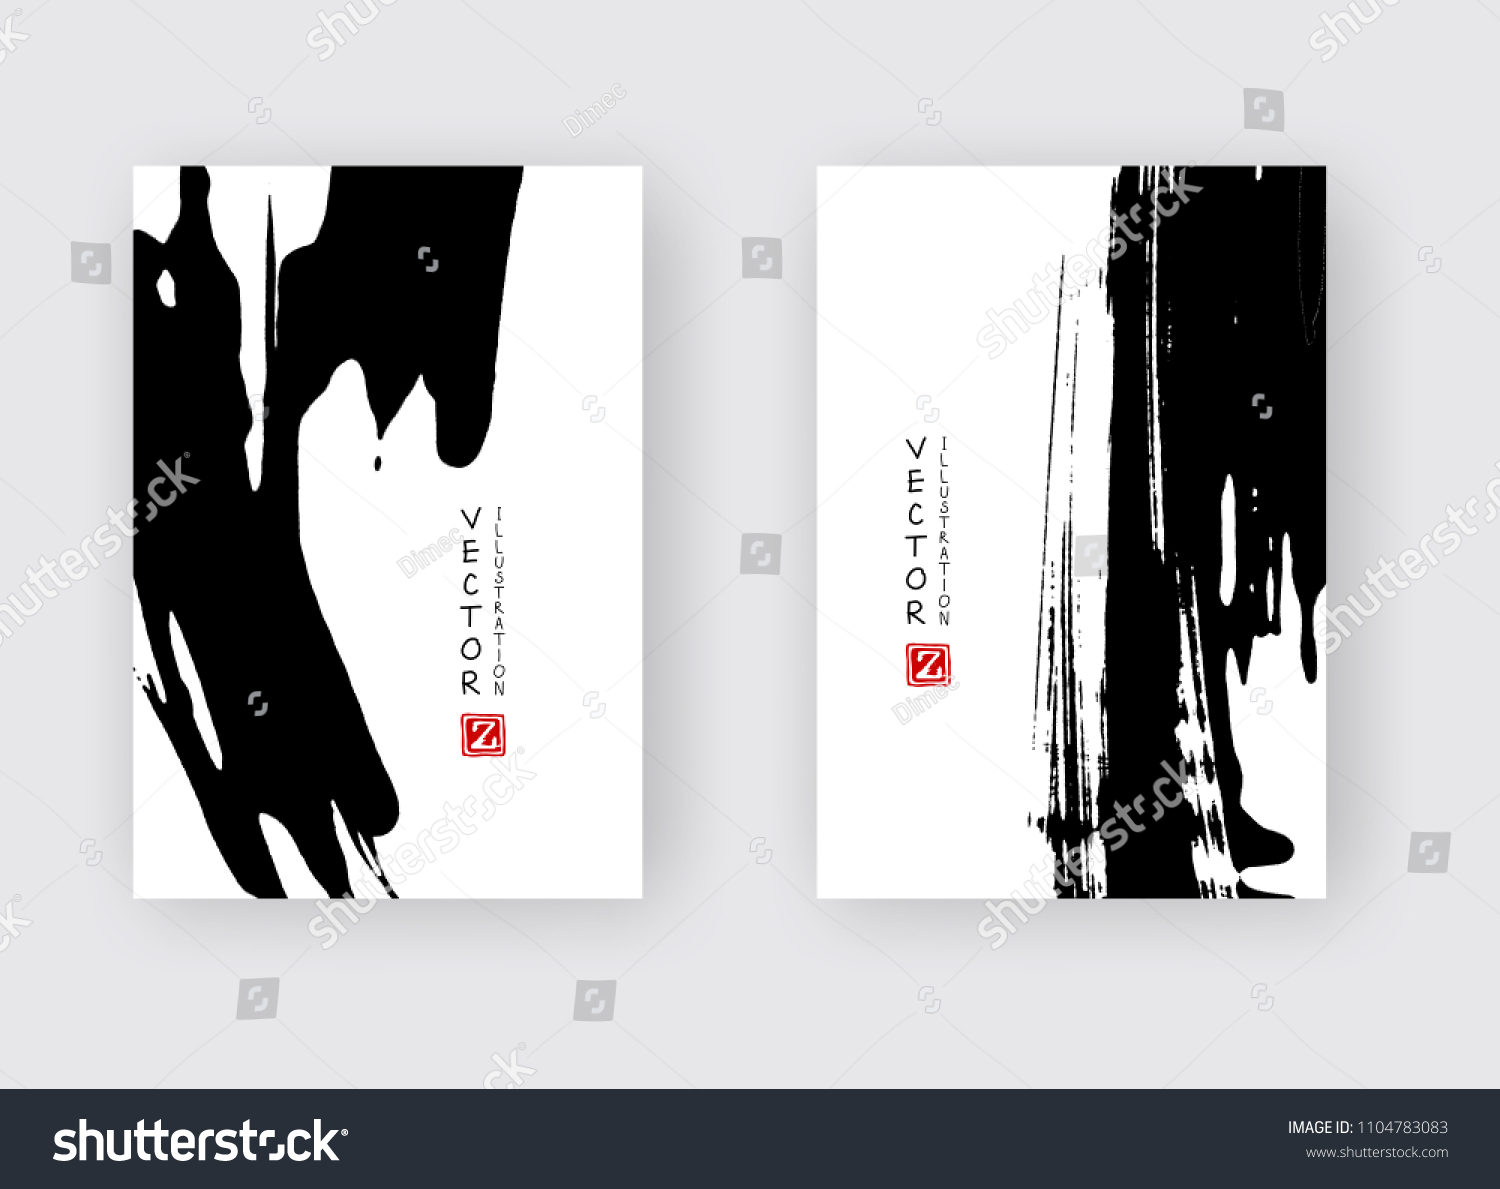 Black ink brush stroke on white background. Japanese style. Vector illustration of grunge stains #1104783083